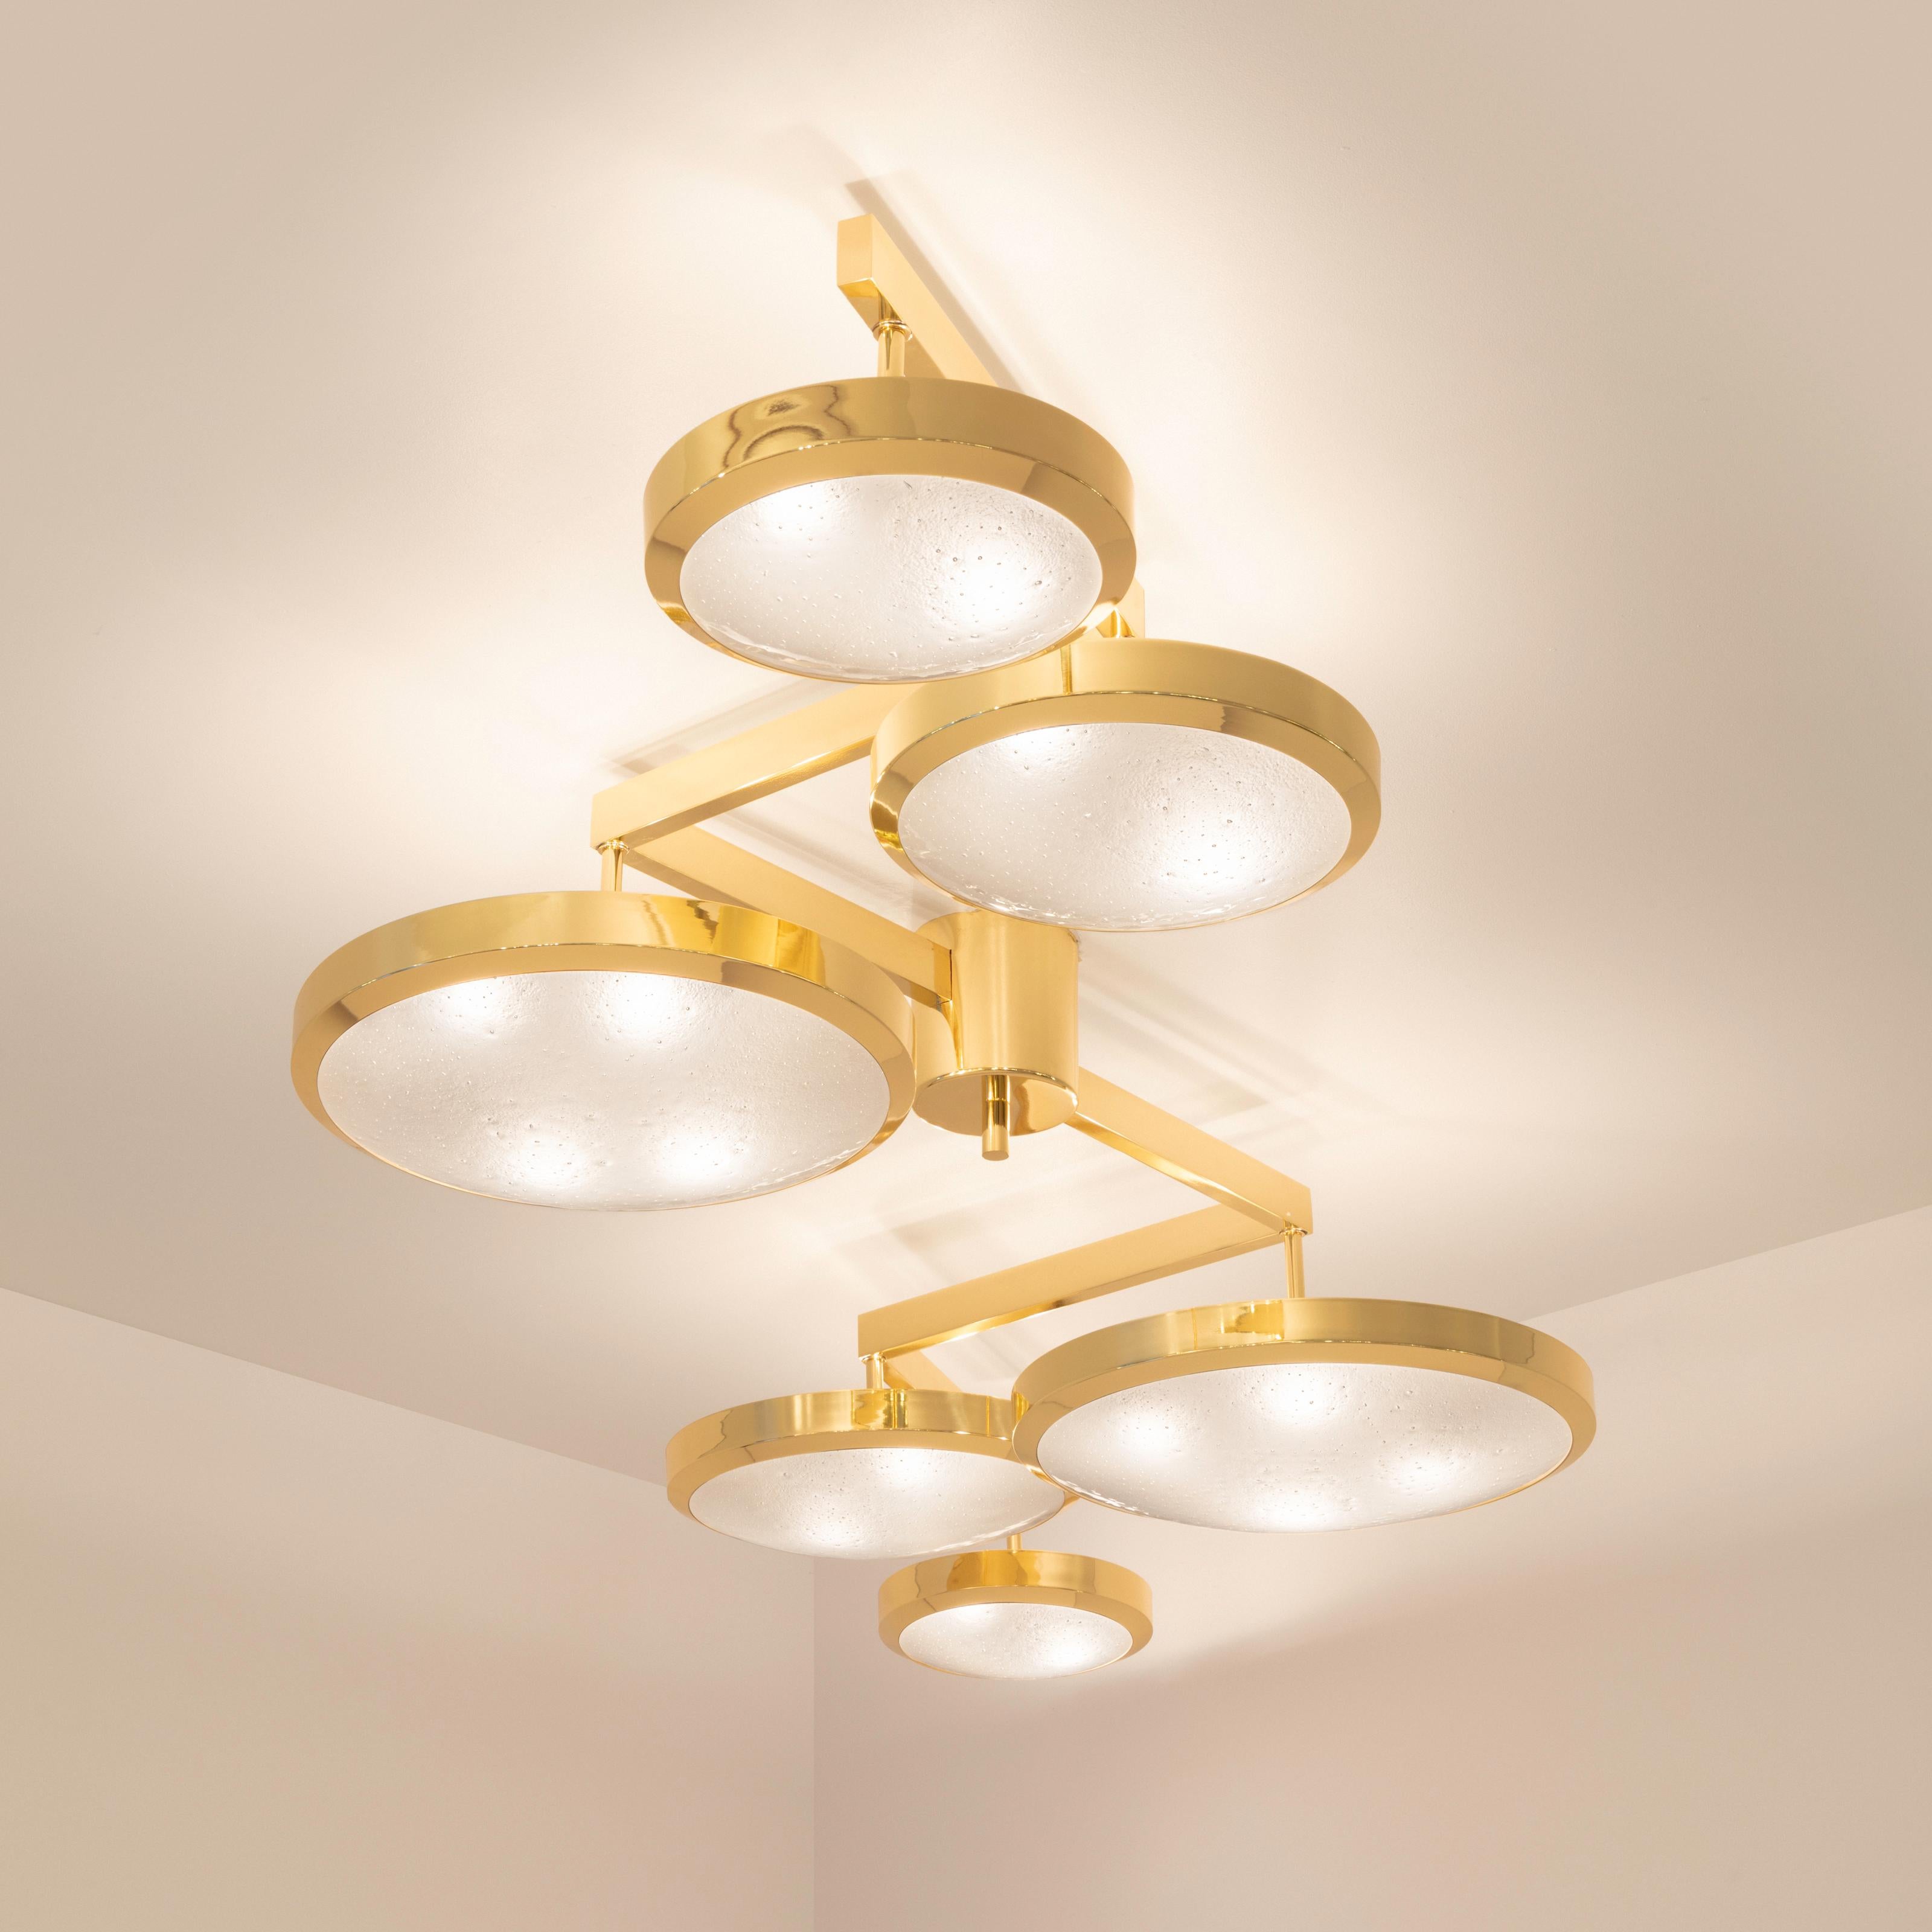 Italian Geometria Sospesa Ceiling Light by Gaspare Asaro-Satin Brass Finish For Sale